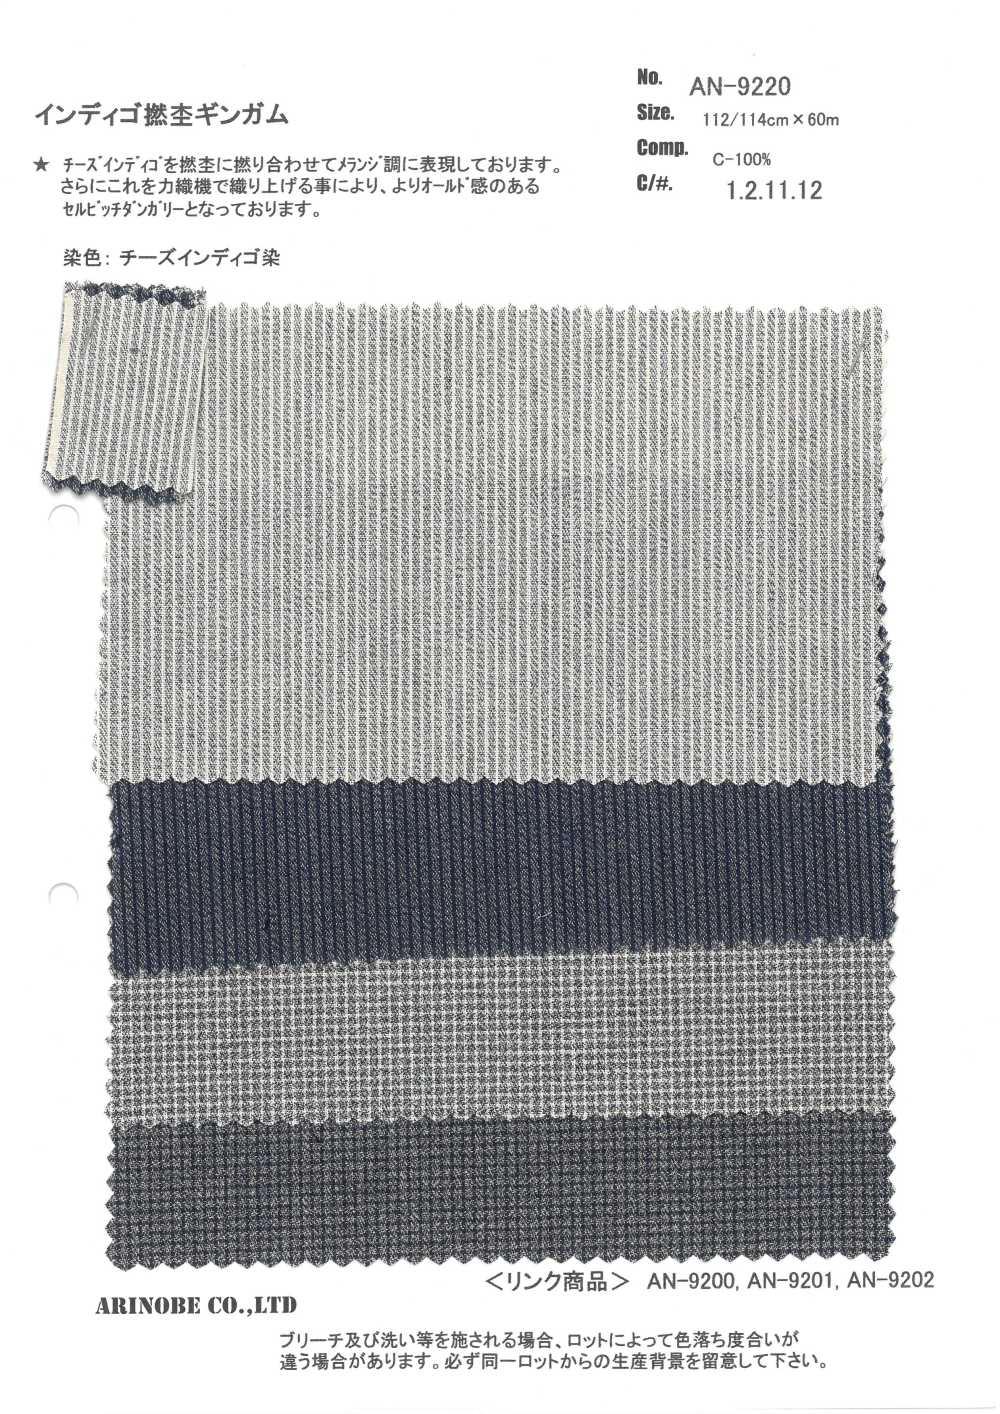 AN-9220 Indigo Twisted Heather Gingham Check[Textile / Fabric] ARINOBE CO., LTD.